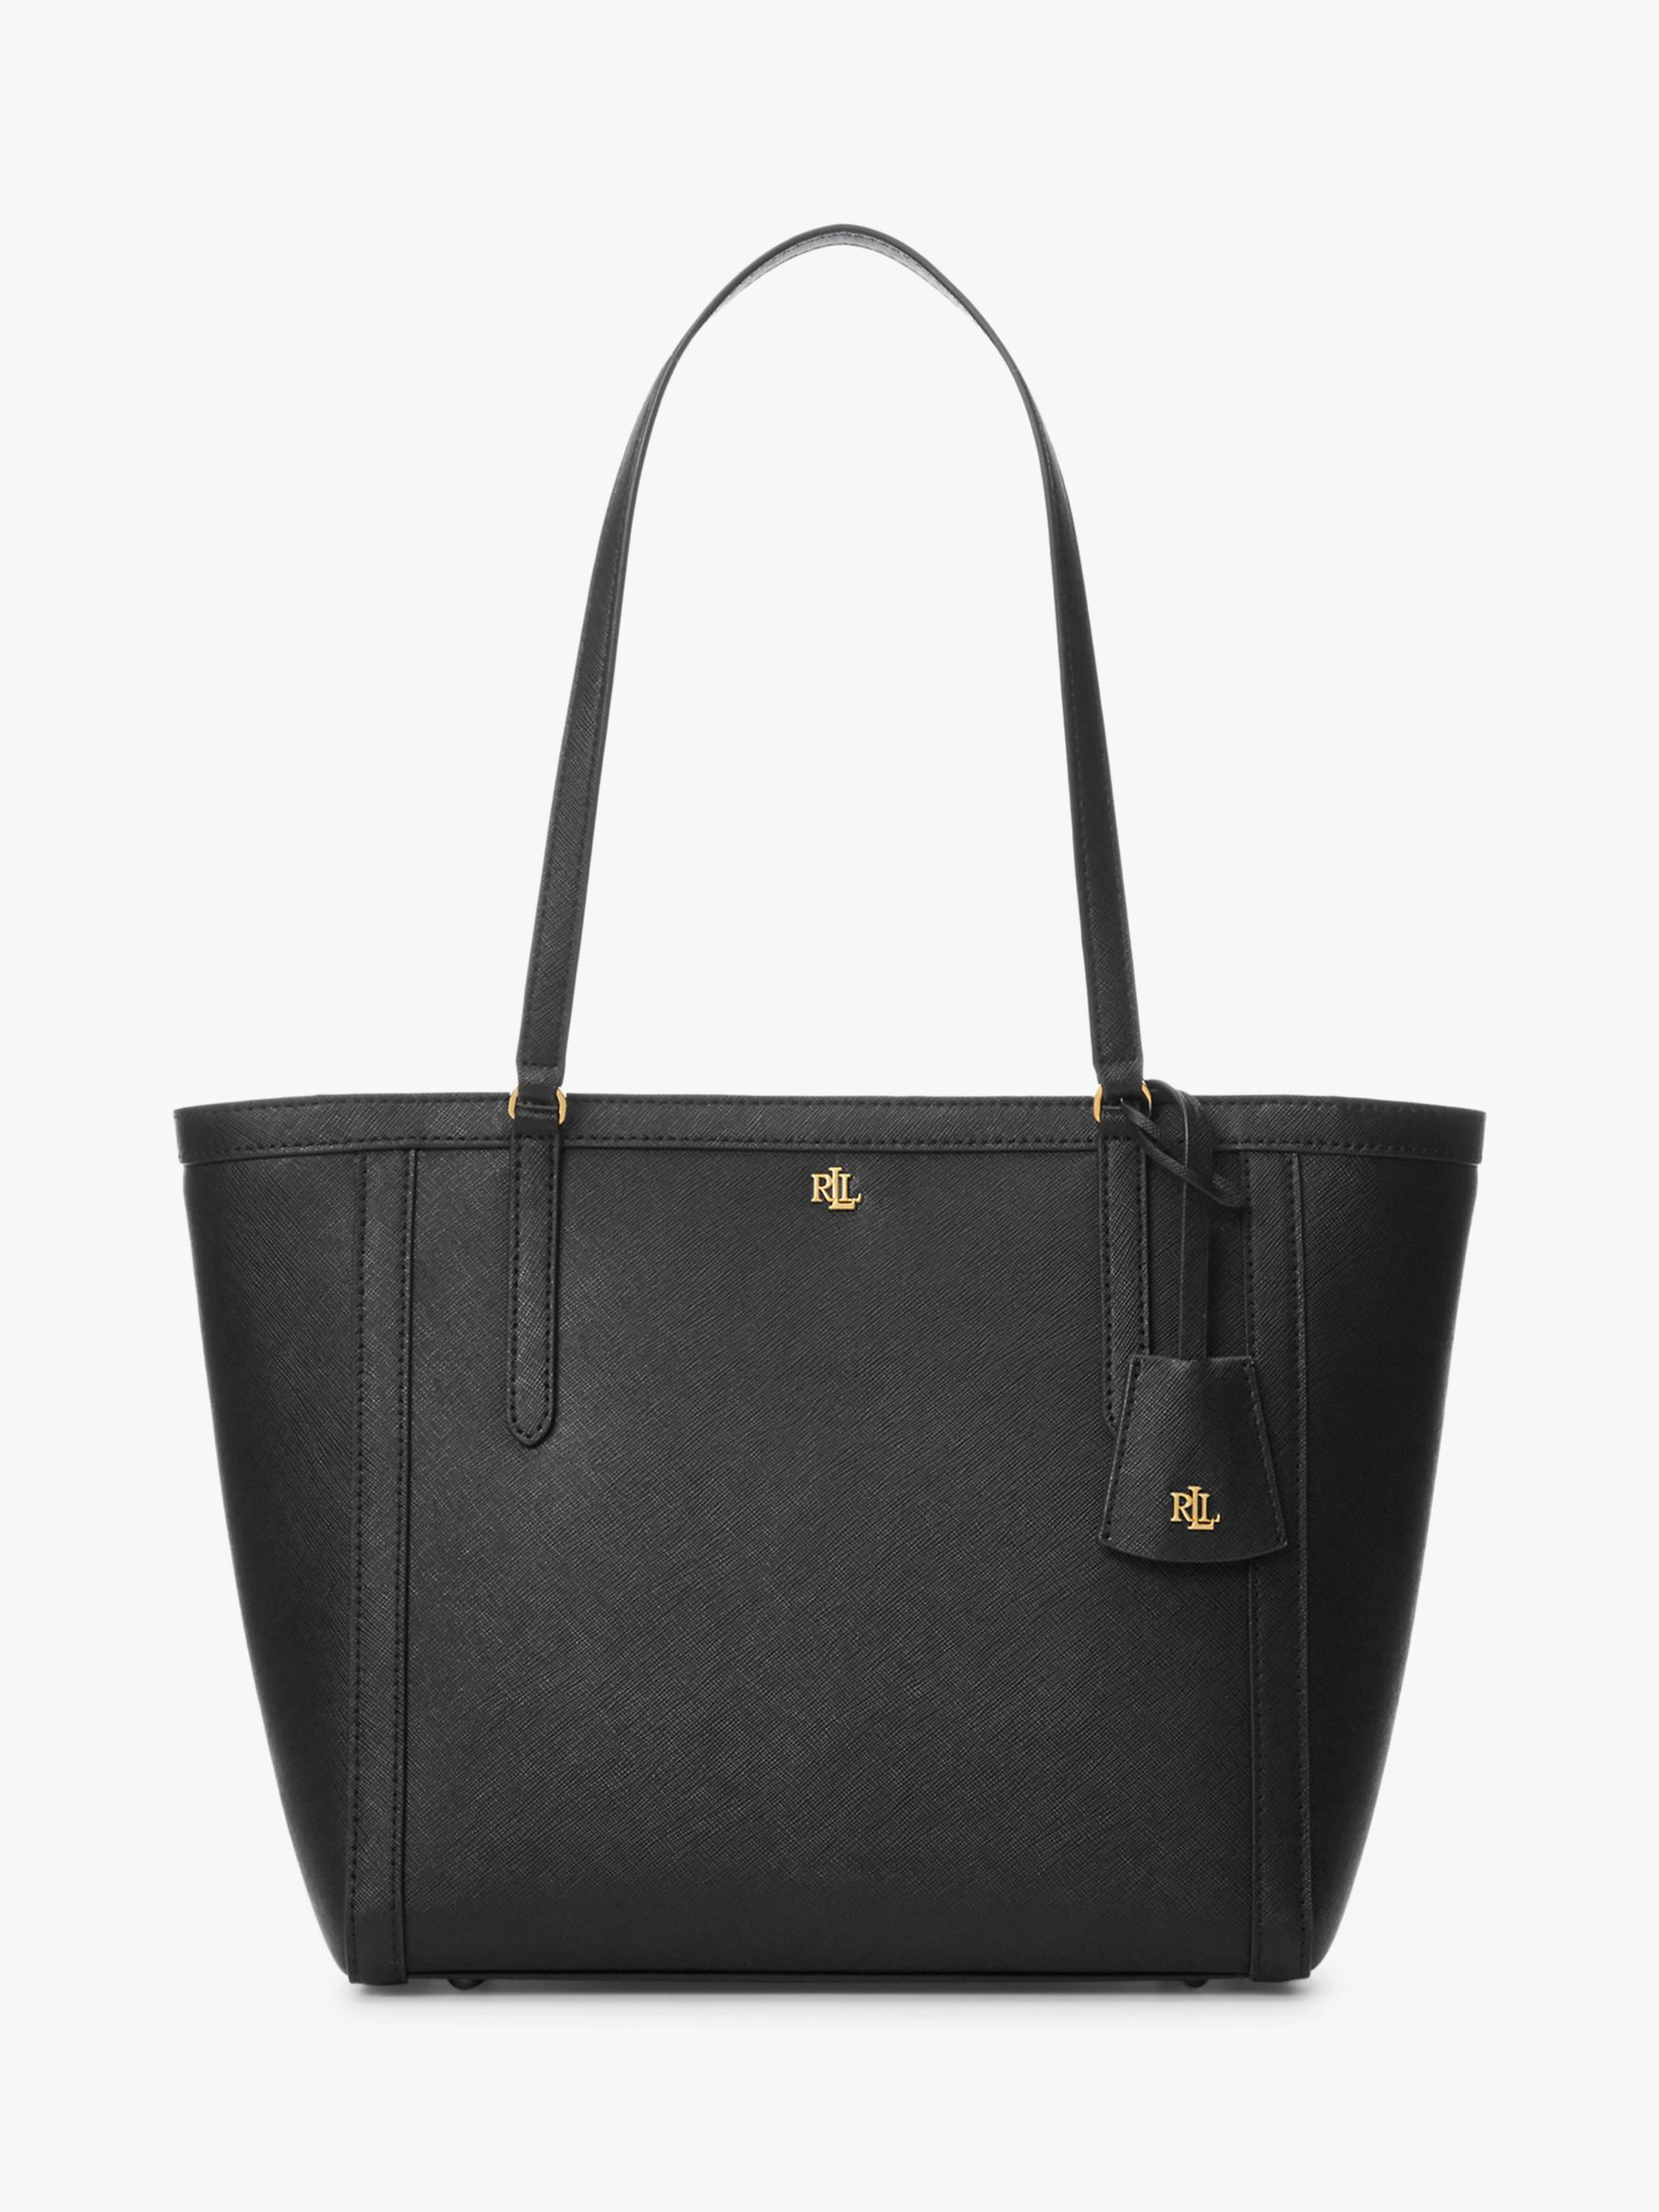 Lauren Ralph Lauren Clare Leather Tote Bag, Black at John Lewis & Partners